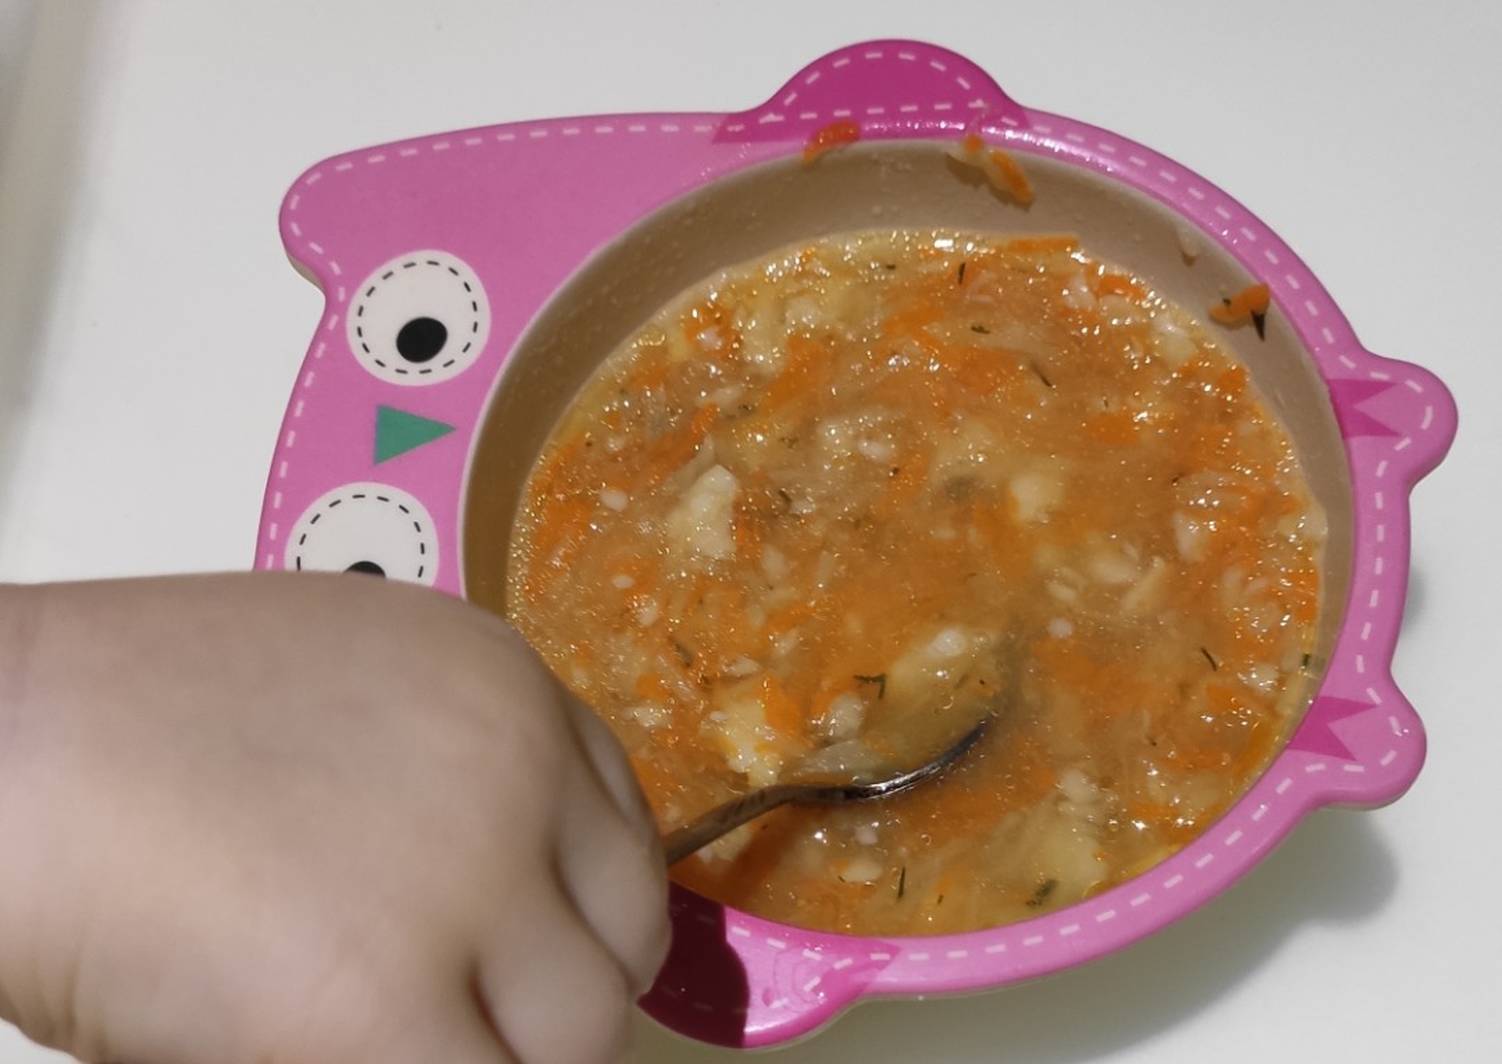 Суп для ребенка 3 года